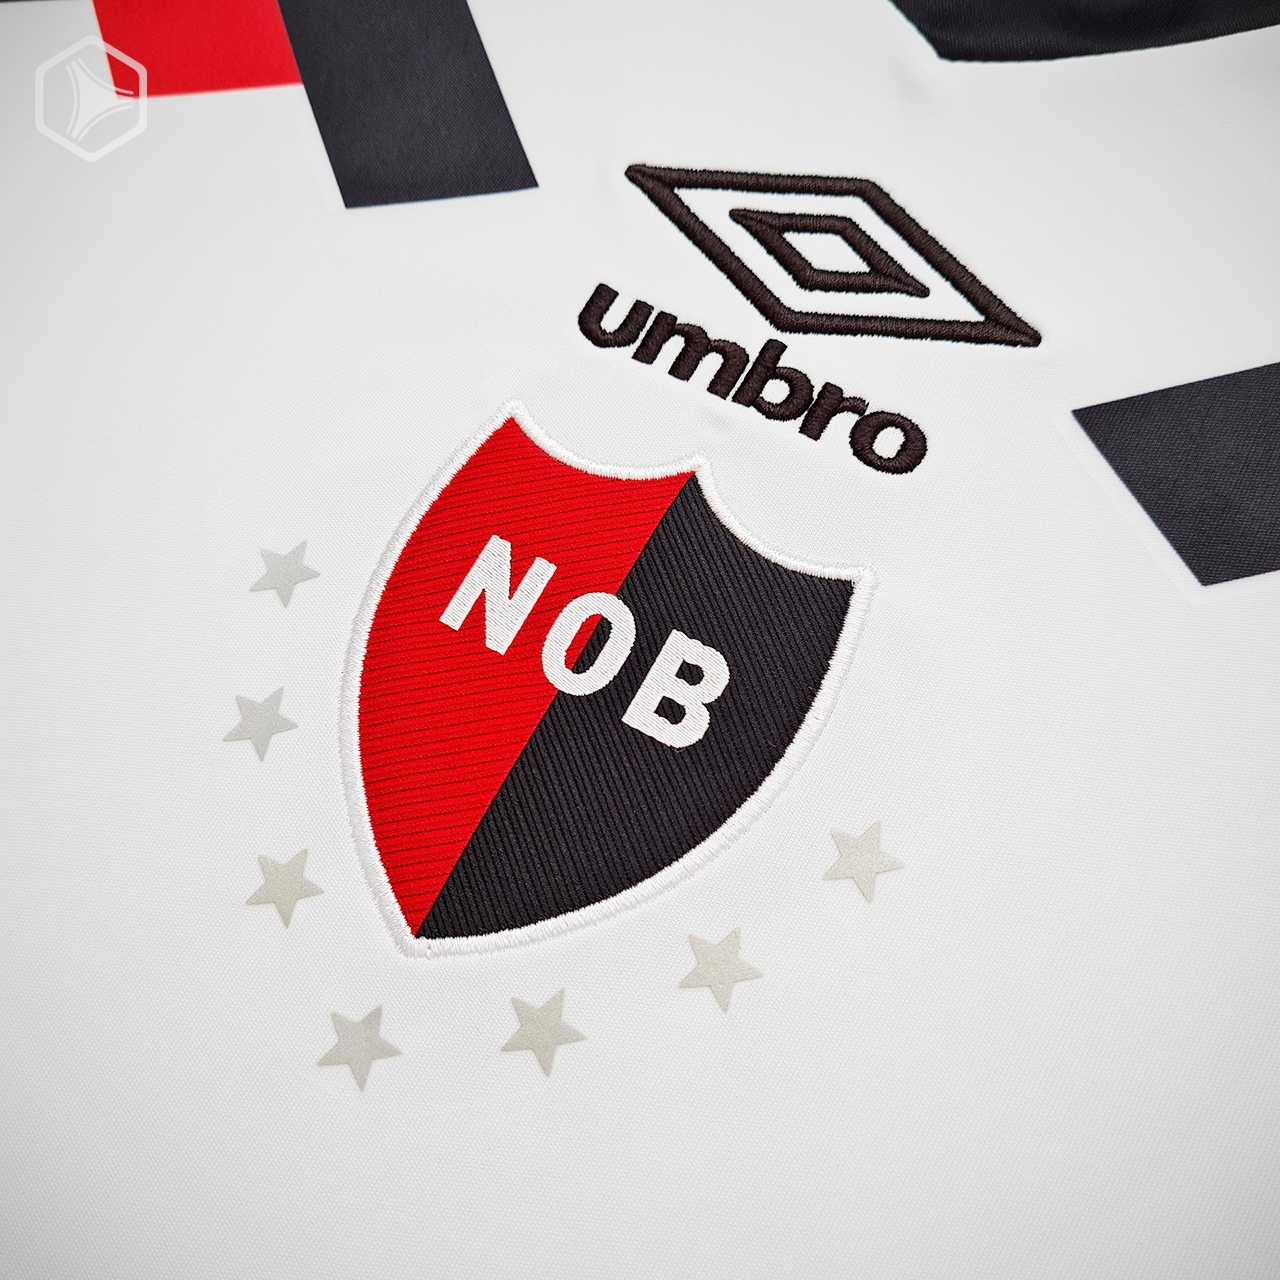 Camisetas Umbro de Newell's Old Boys 2021 2022 Titular